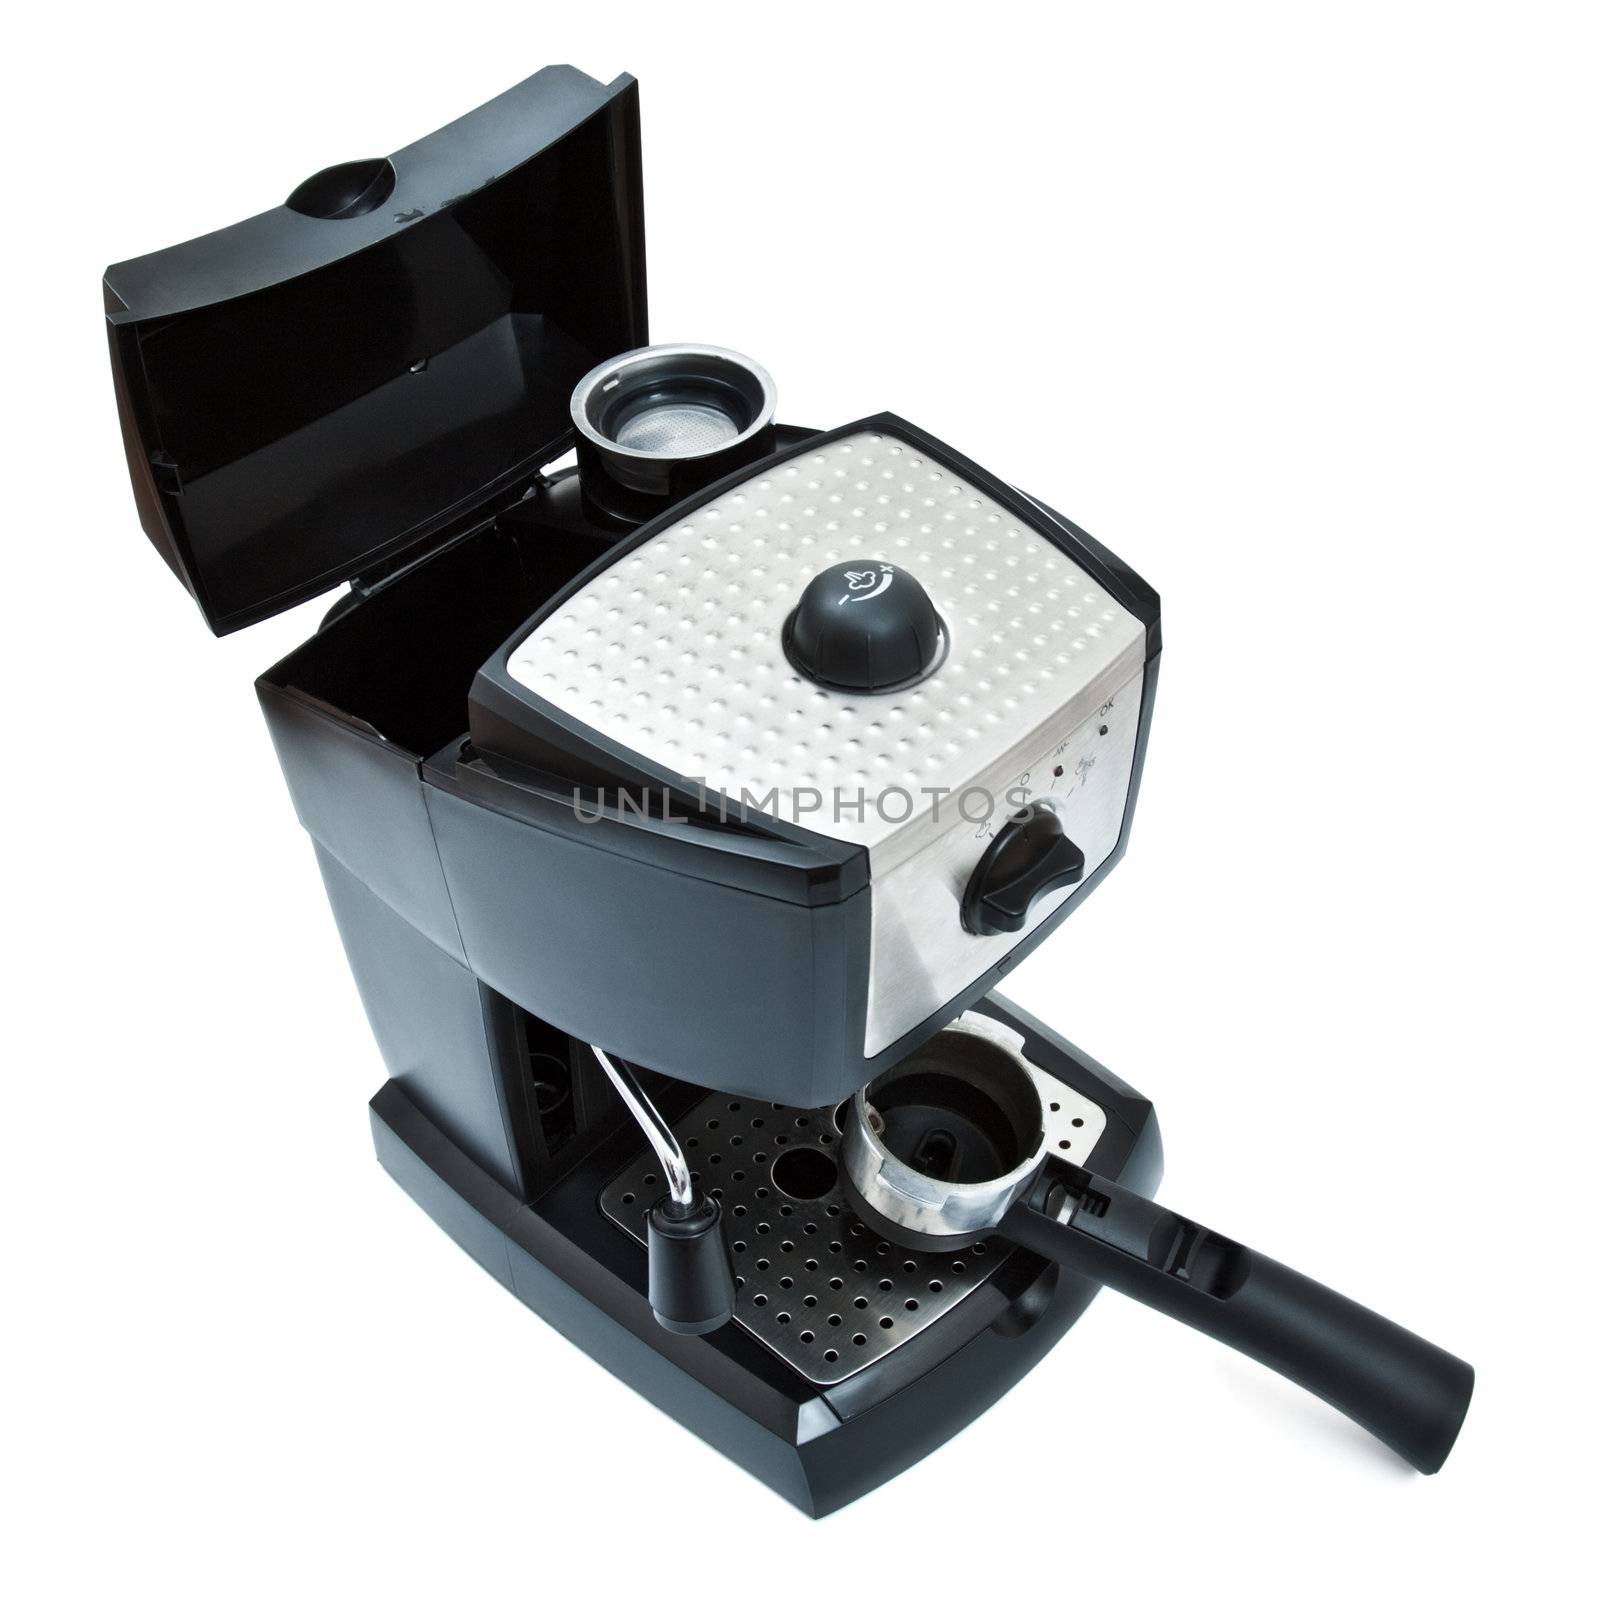 black espresso machine isolated on white background